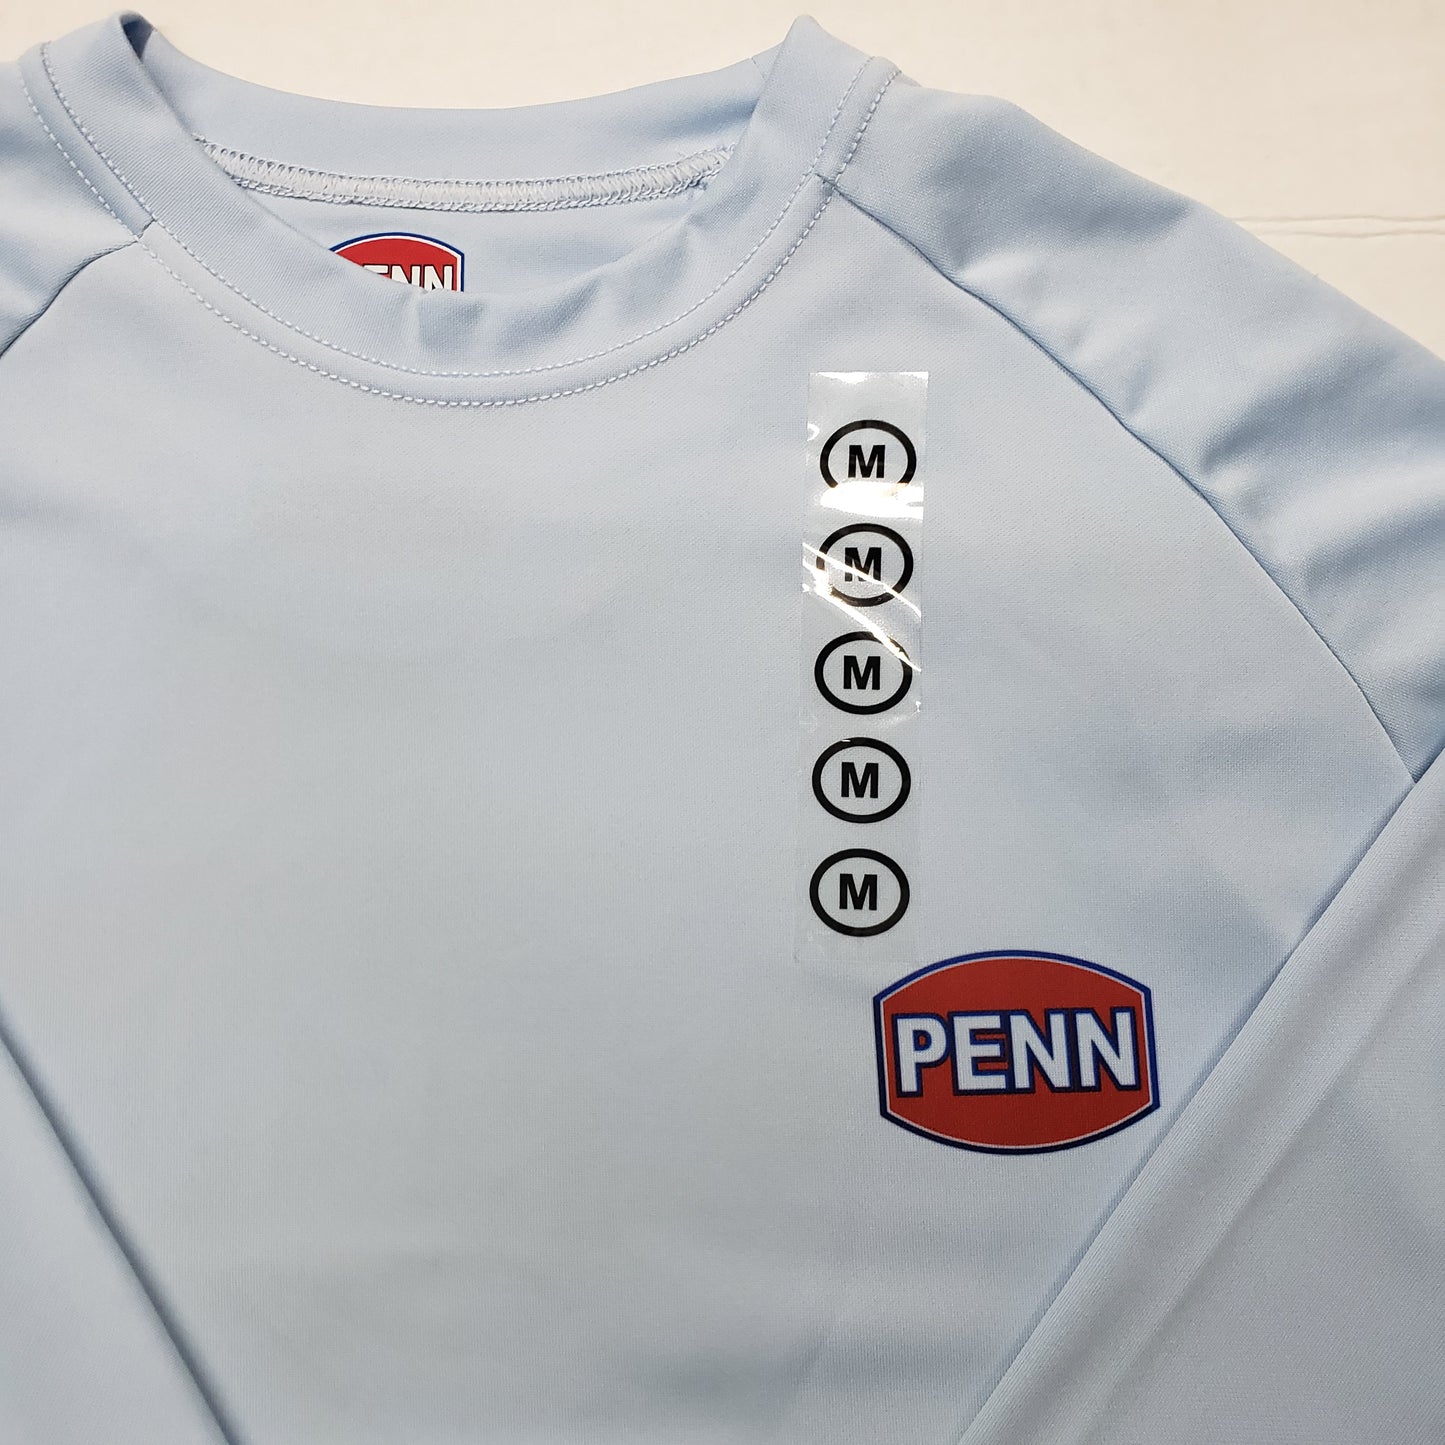 Penn Long Sleeve Performance Shirt Light Blue w/ Fish Around Logo Medium